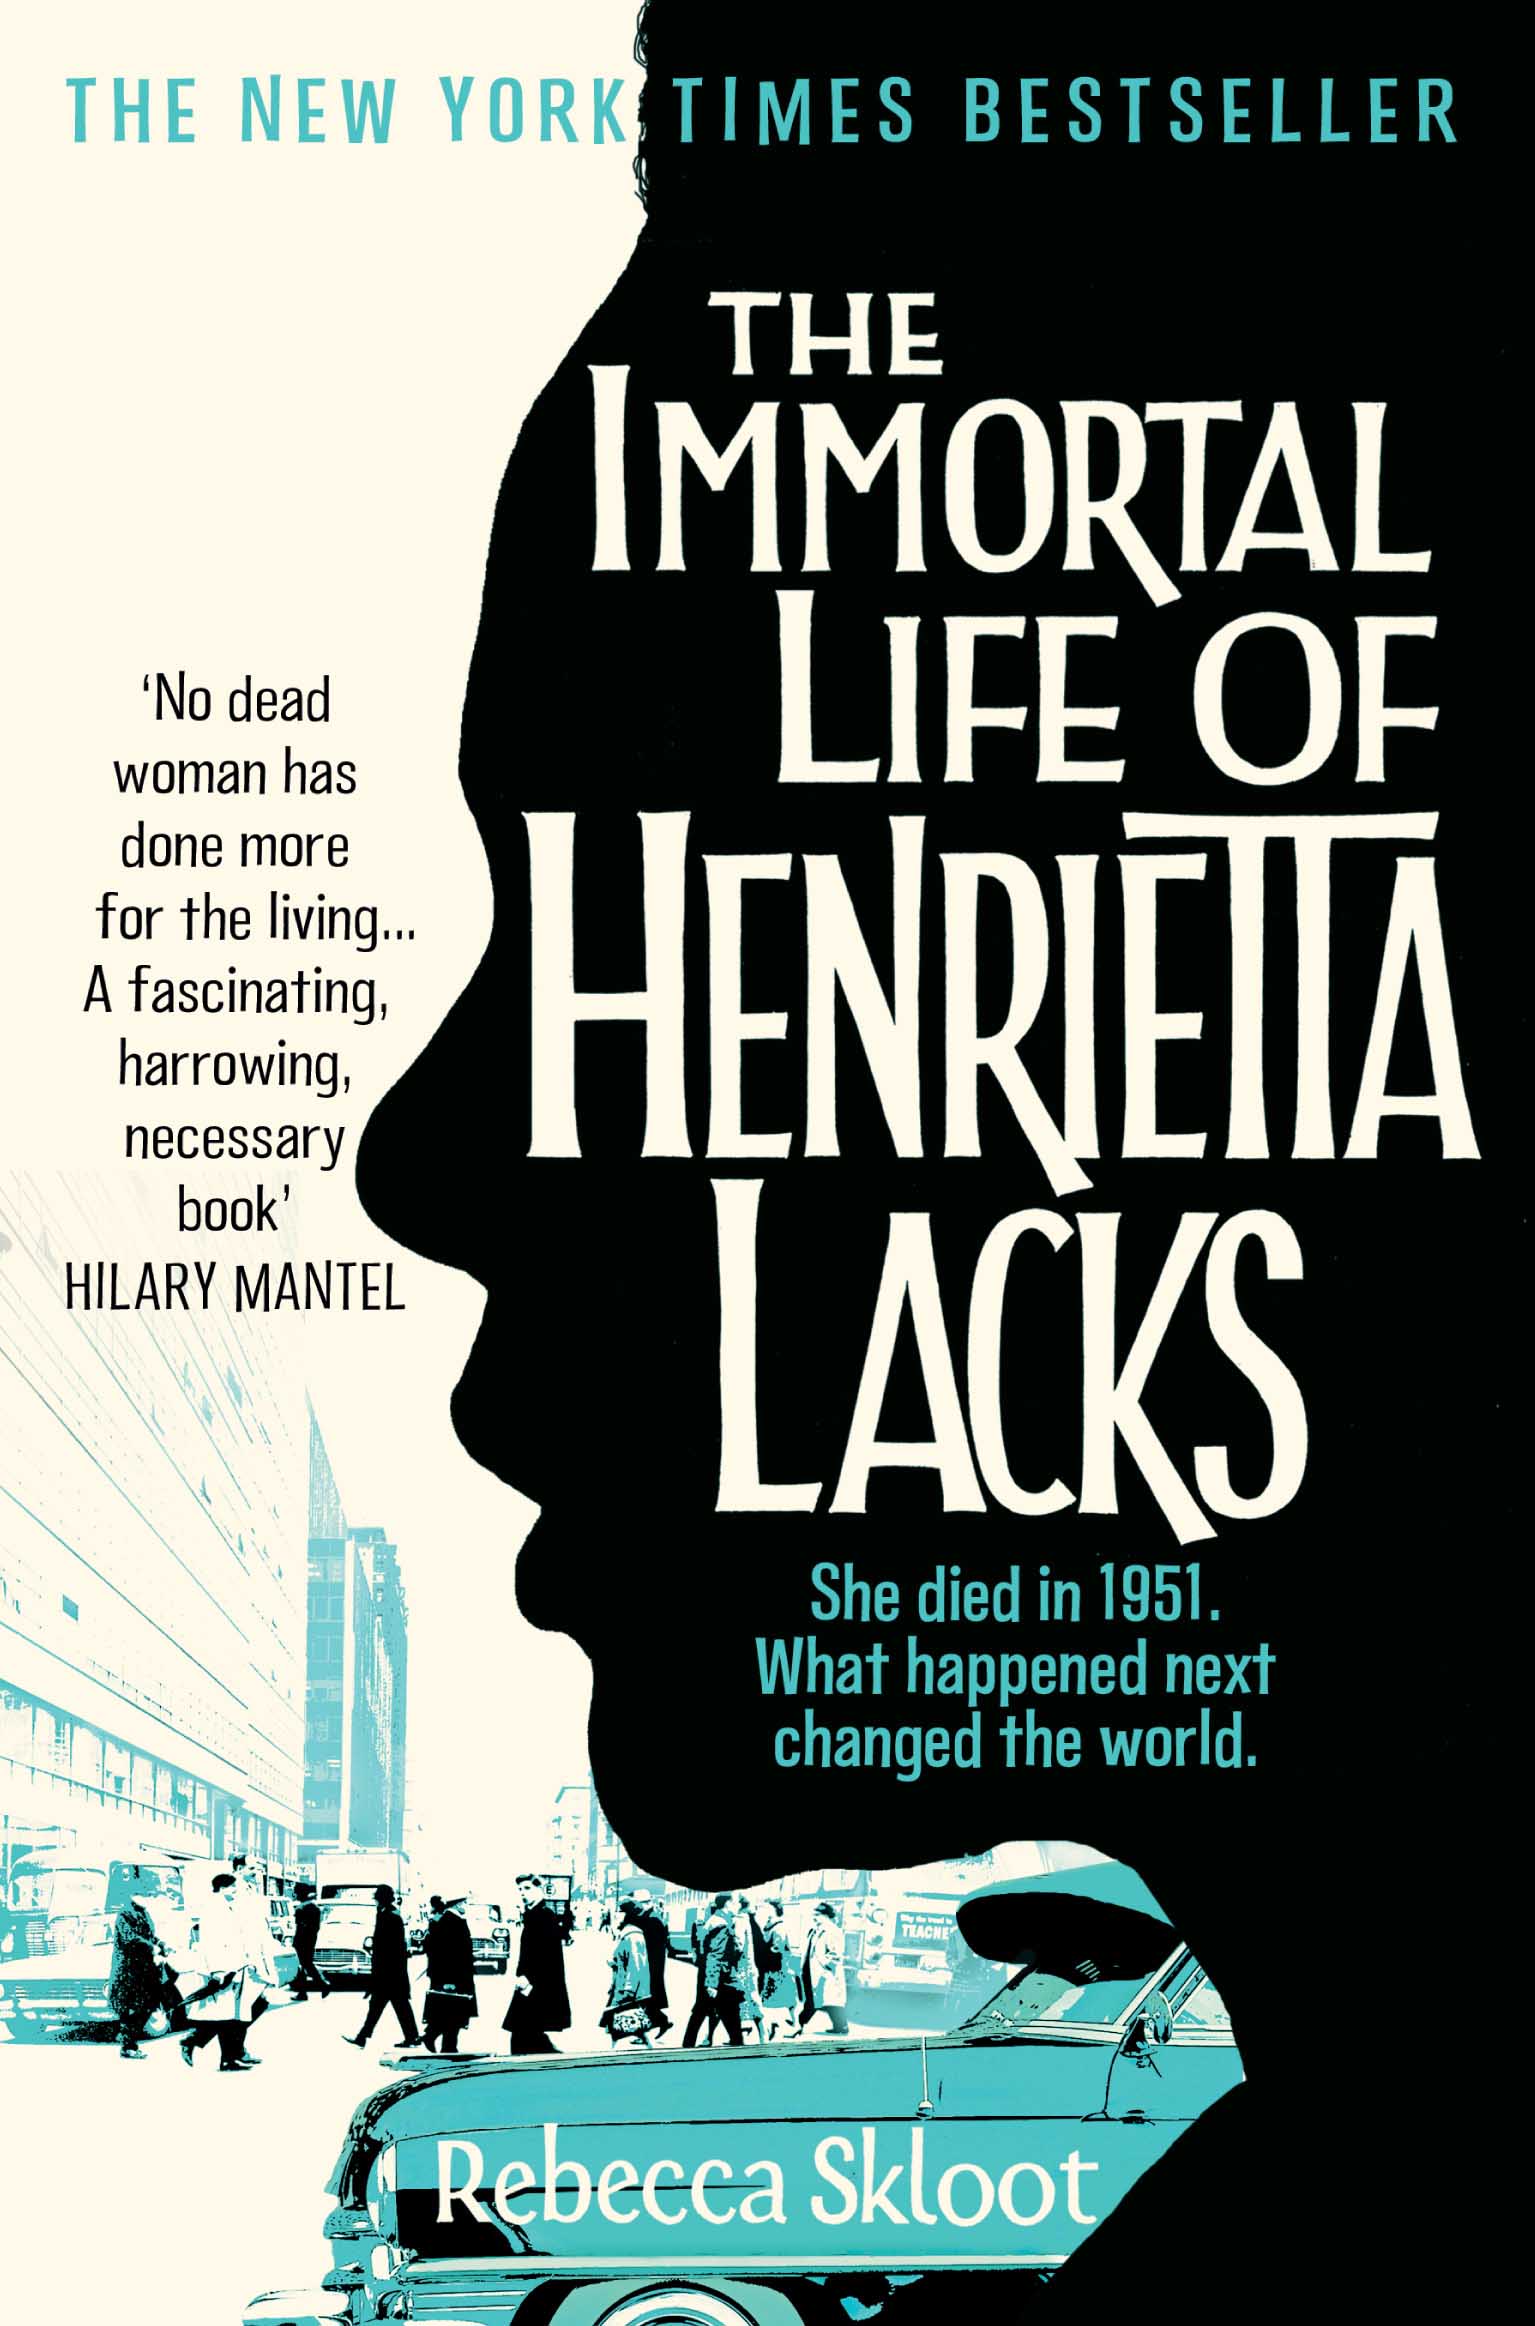 The immortal life of henrietta lacks summary from 